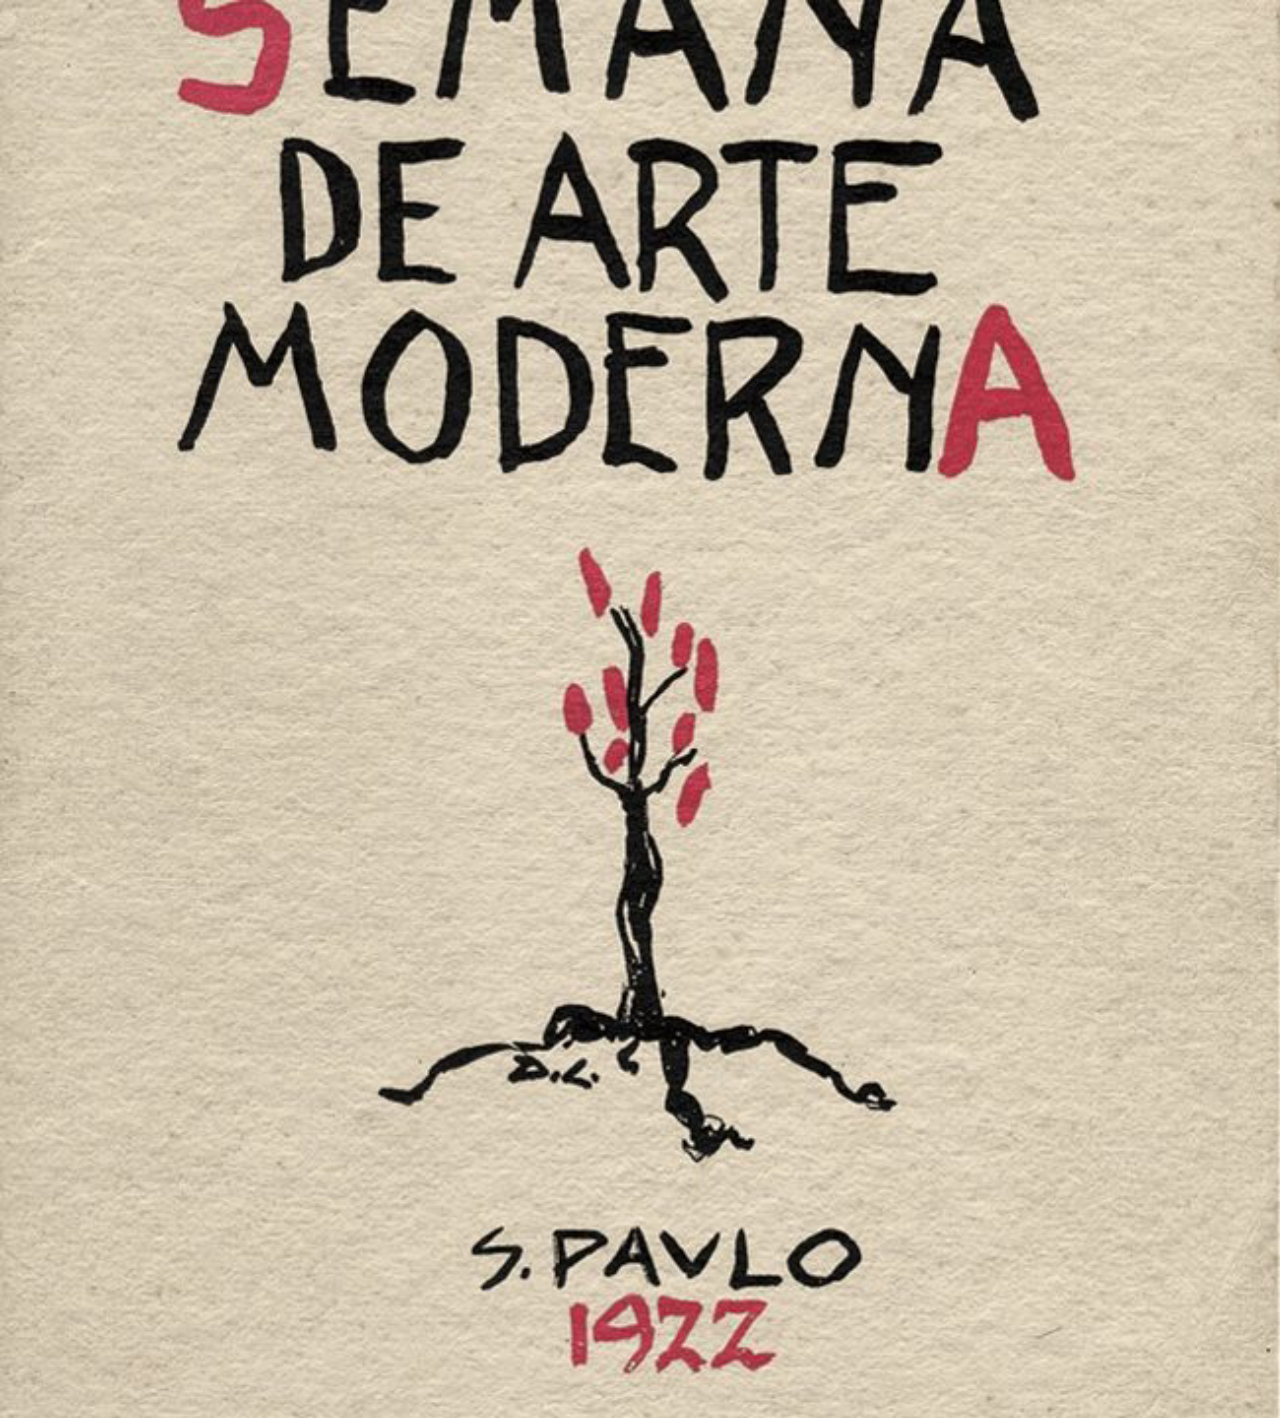 Cartaz  da Semana de Arte Moderna de1922 feito pelo artista Di Cavalcanti.